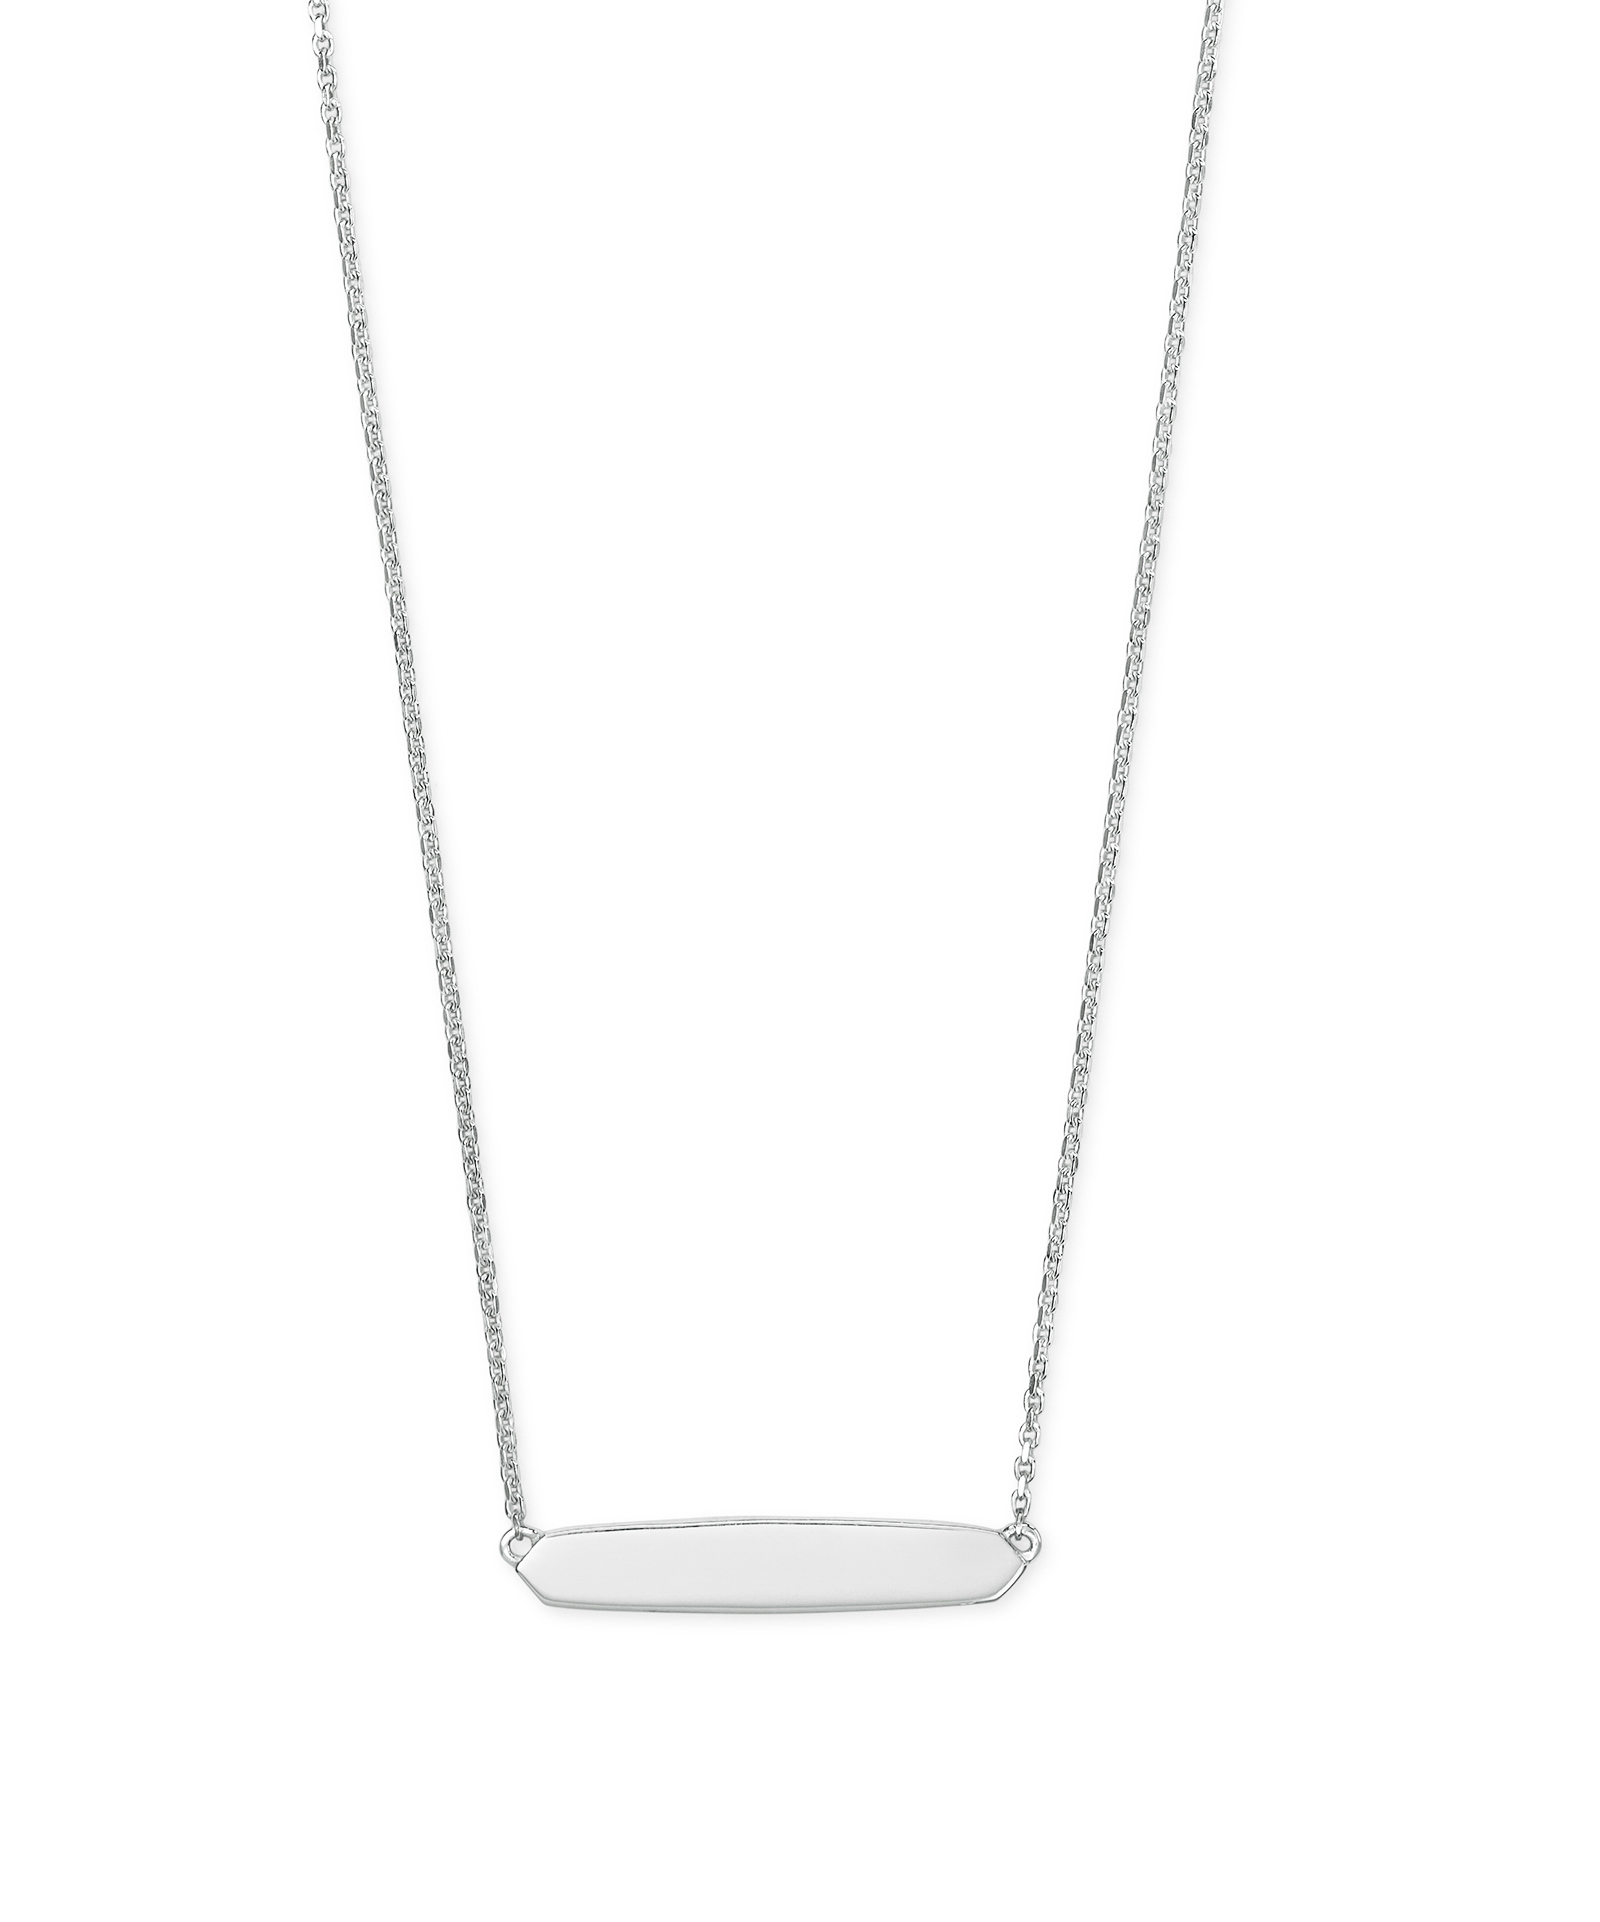 New Kendra Scott Elisa London Blue Pendant Silver Necklace | eBay